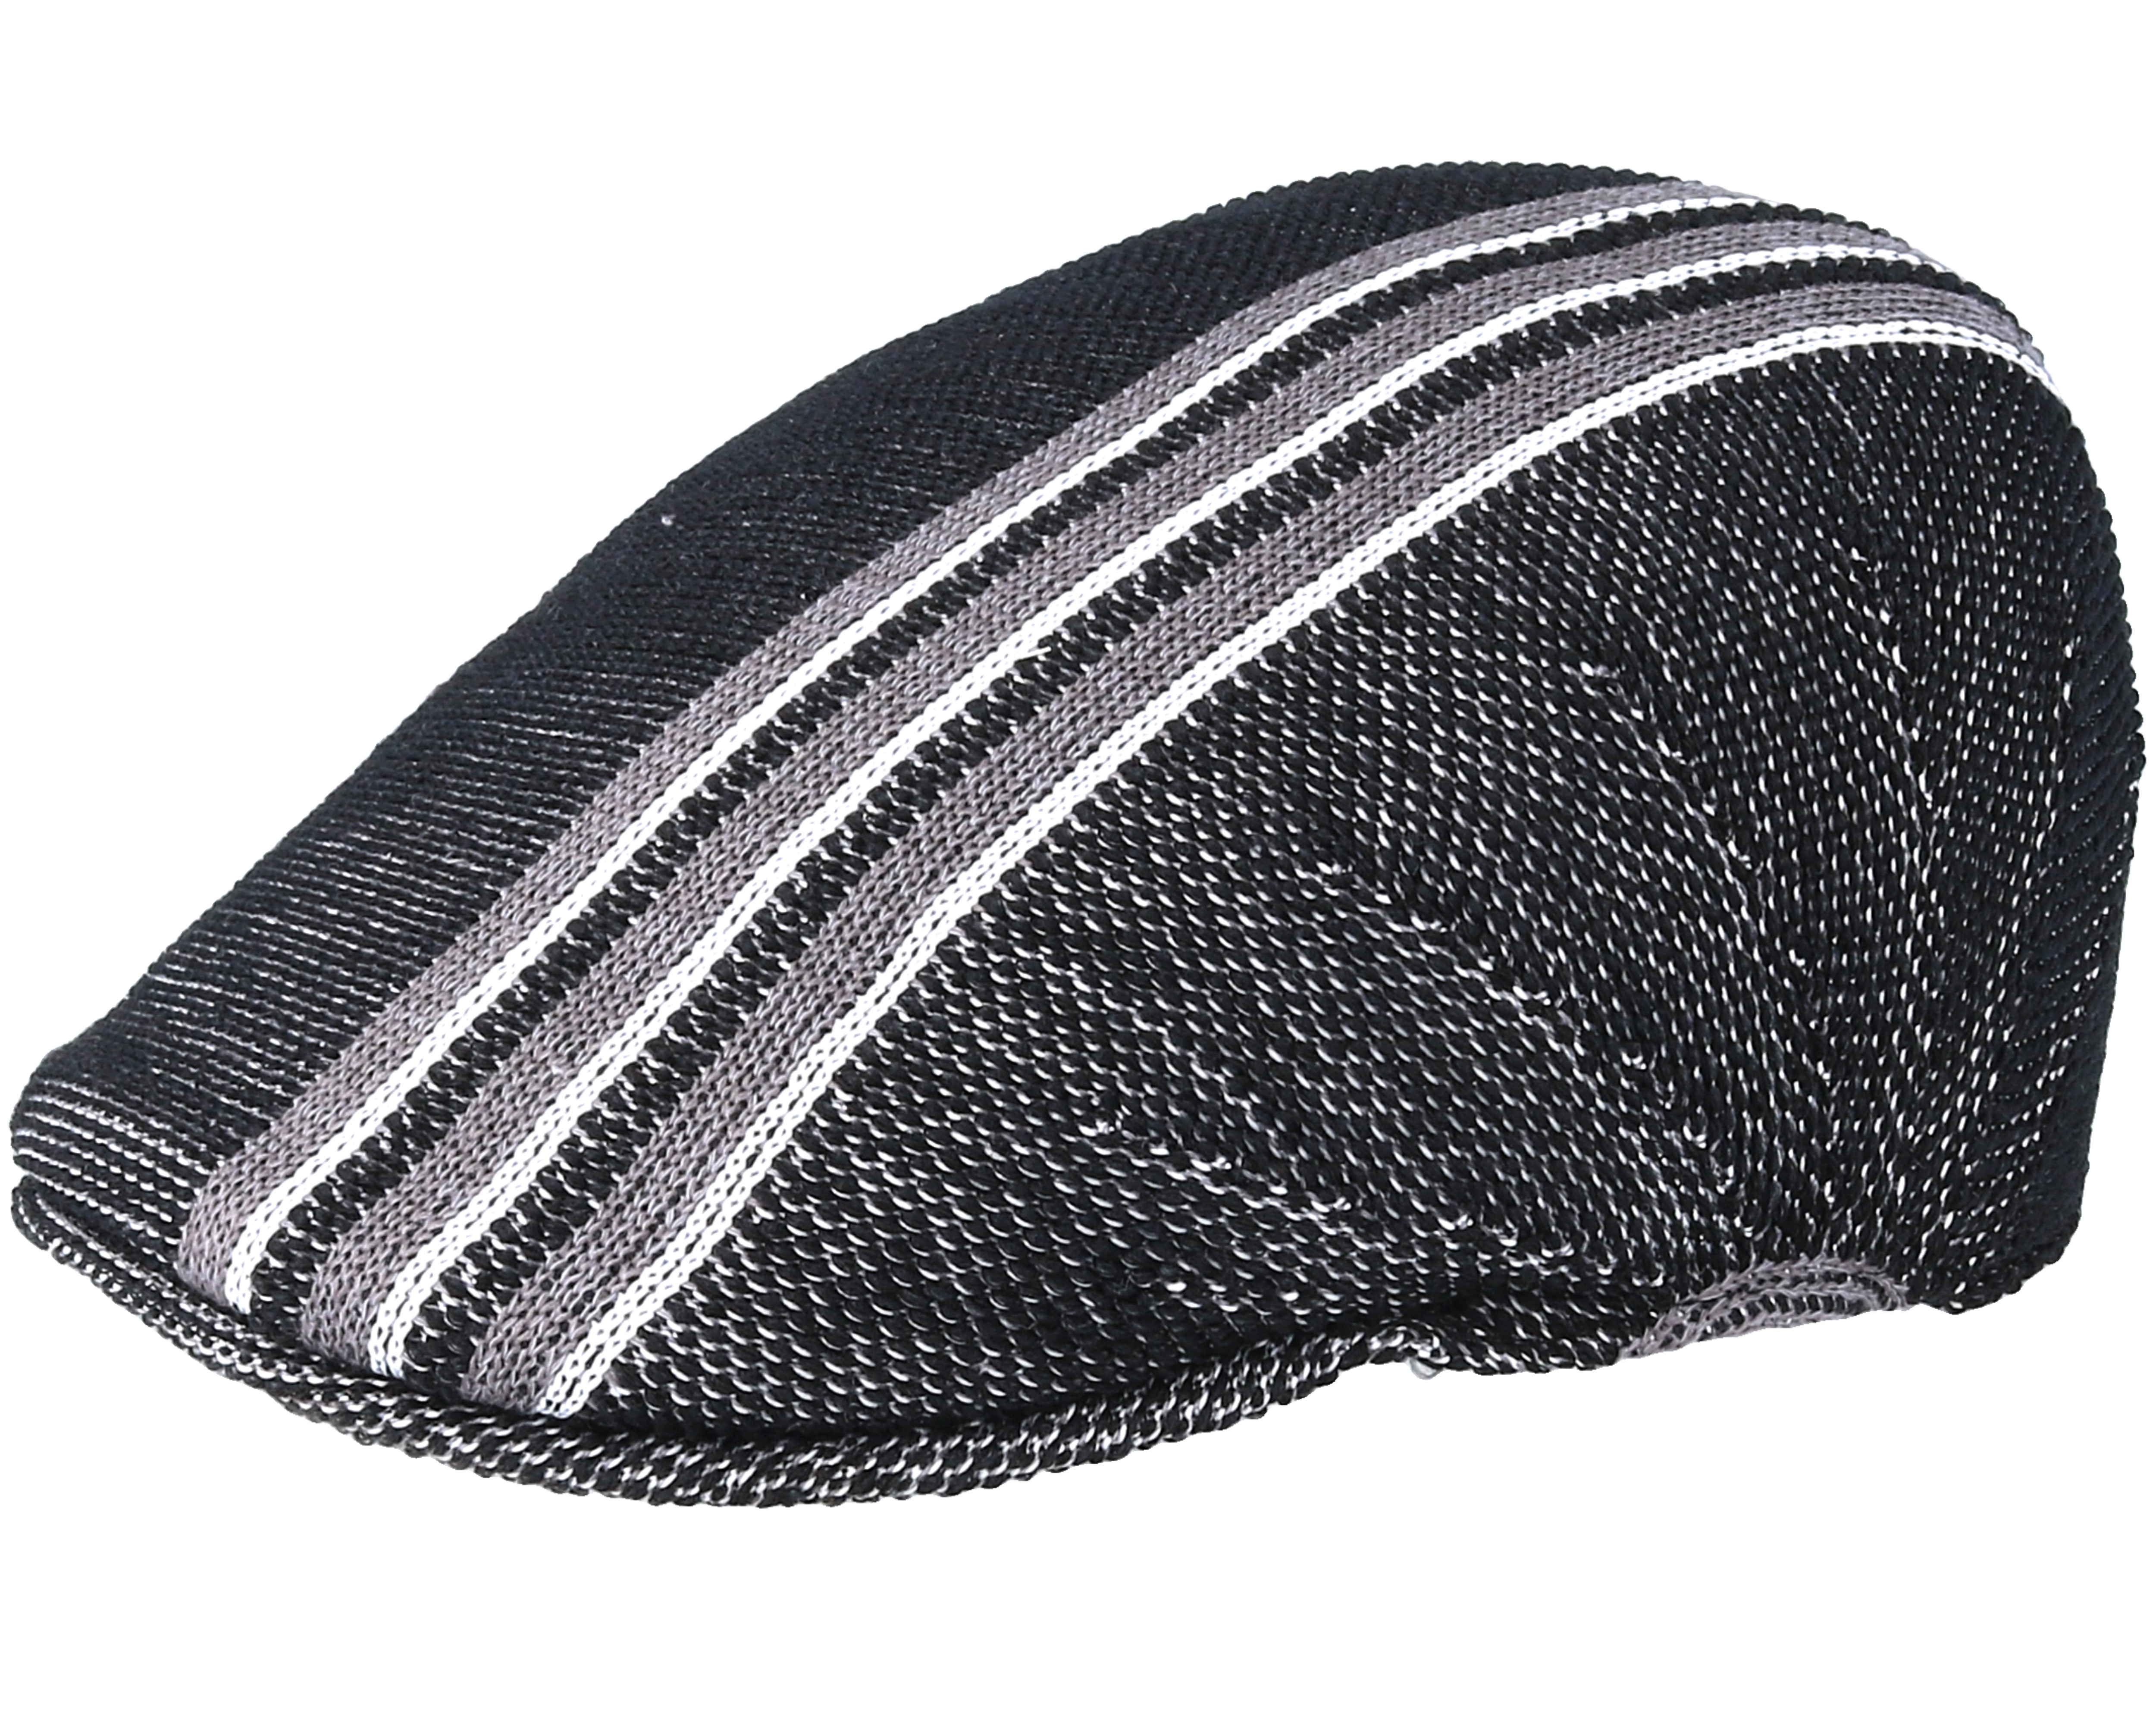 Travel Stripe 507 Black Flat Cap - Kangol caps | Hatstore.co.uk